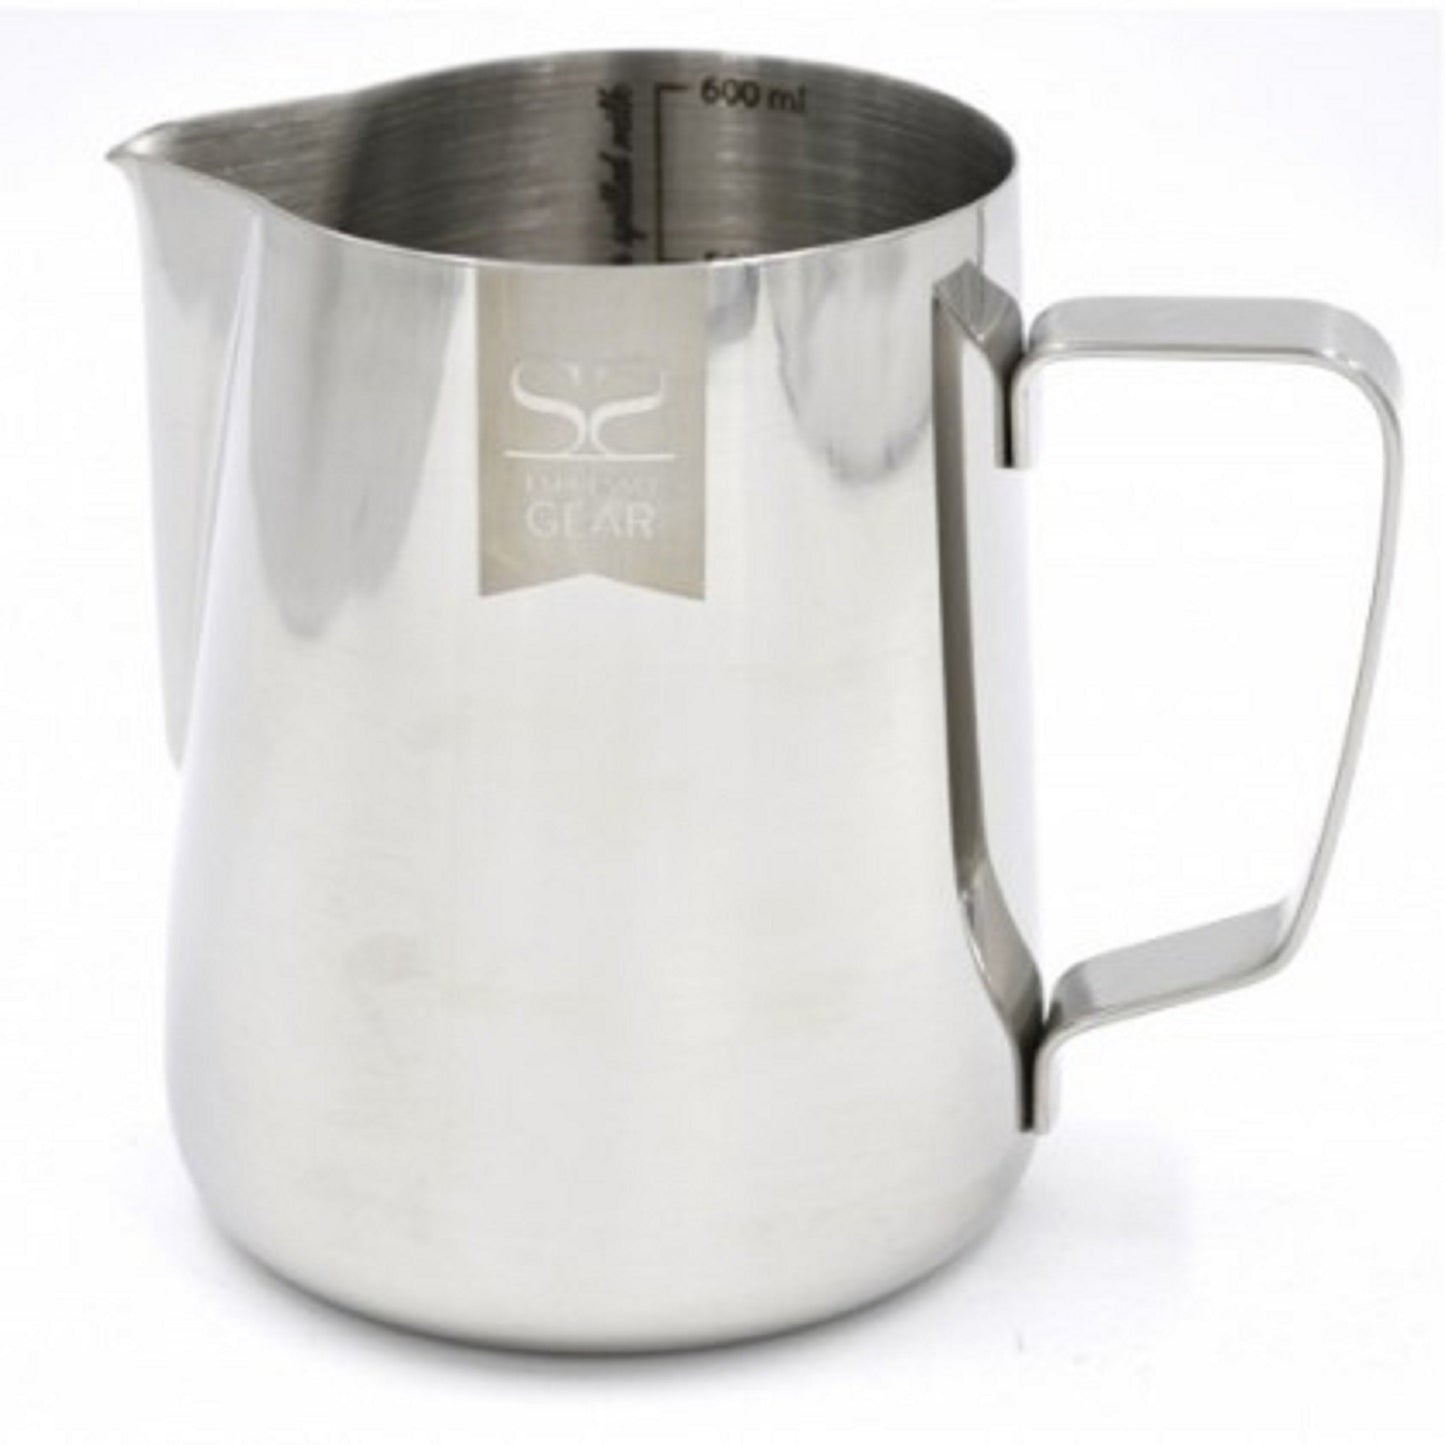 Espresso Gear Foaming Jug -  Stainless Steel jug with handleVelo Coffee Roasters